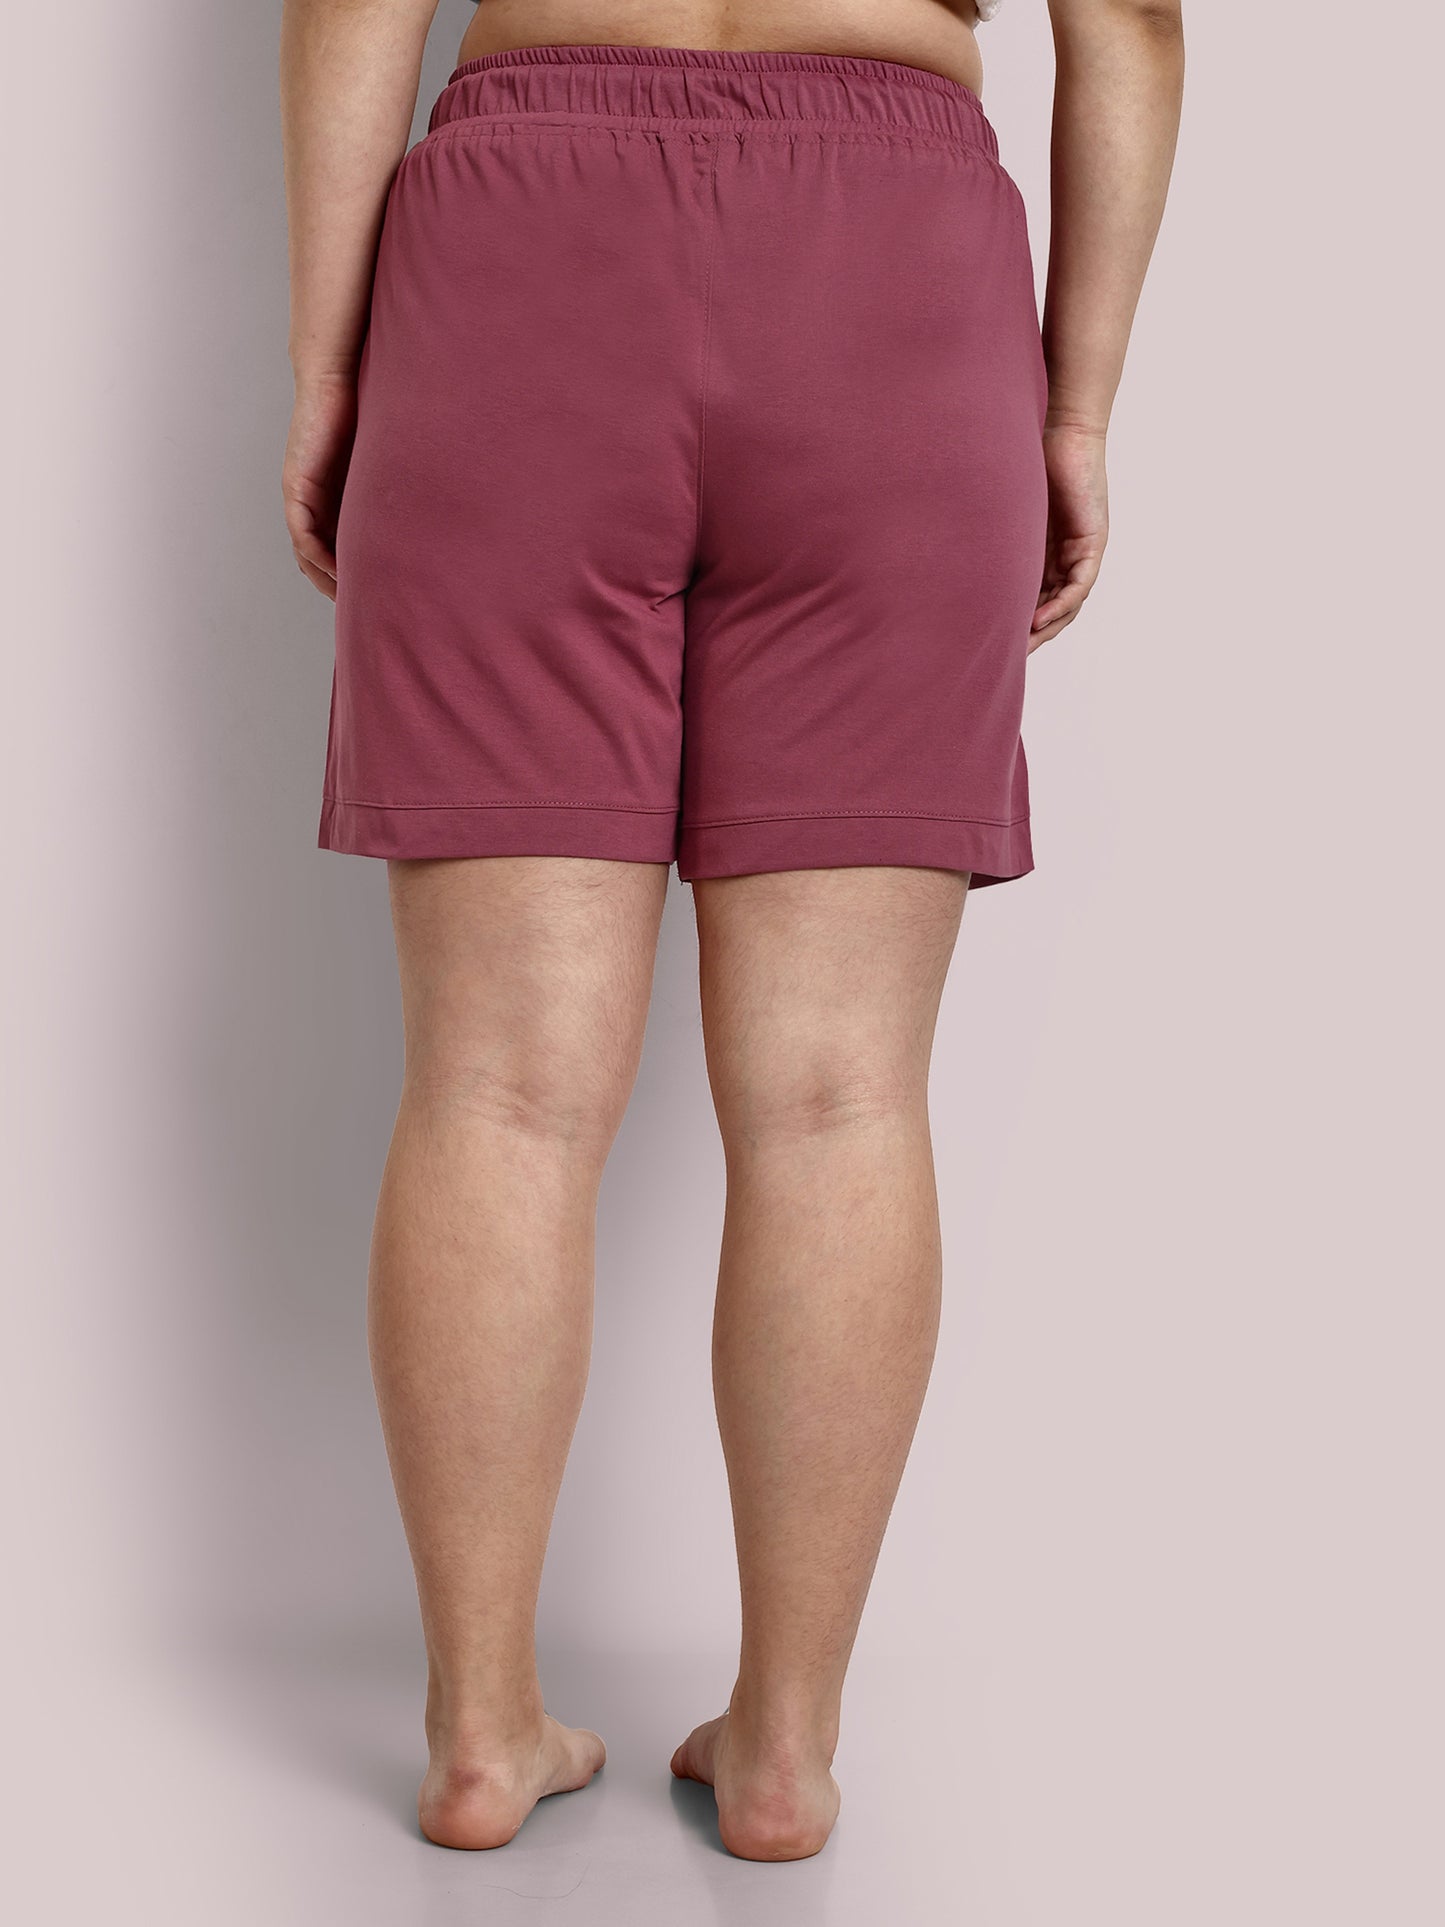 Stylish Mauve Cotton Shorts For Women(Plain Bermuda) online in India